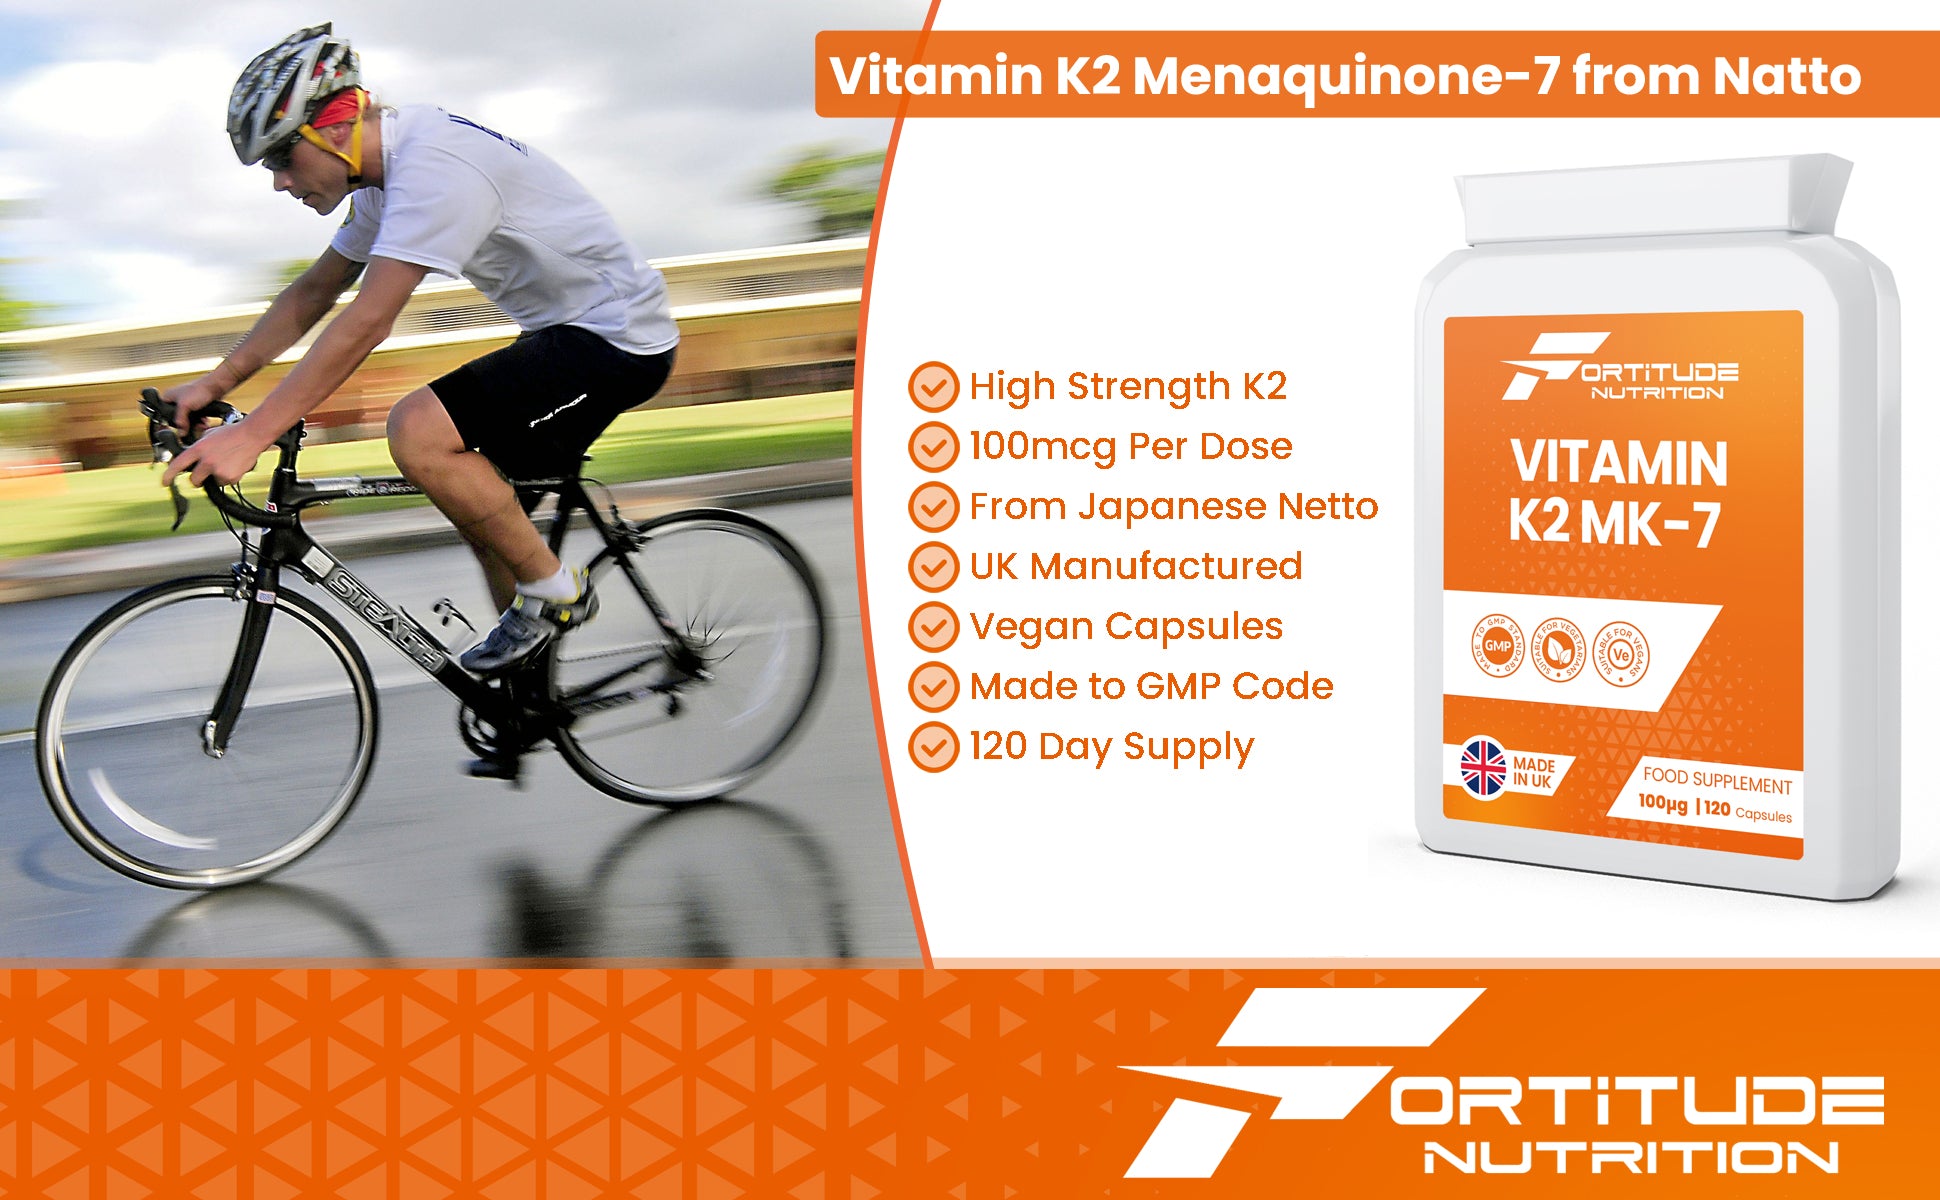 Fortitude Nutrition Vitamin K2